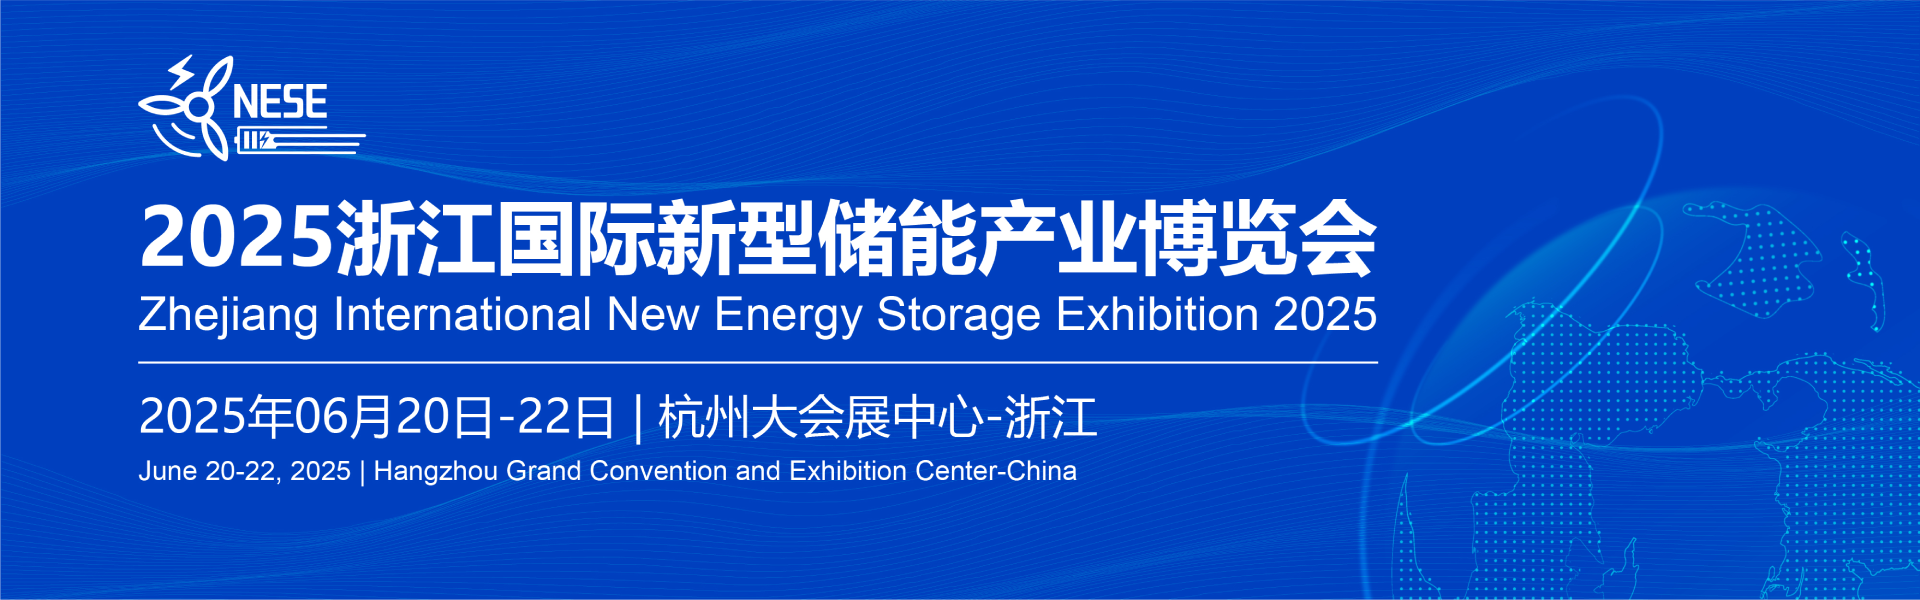 Zhejiang International New Energy Storage Exhibition 2025